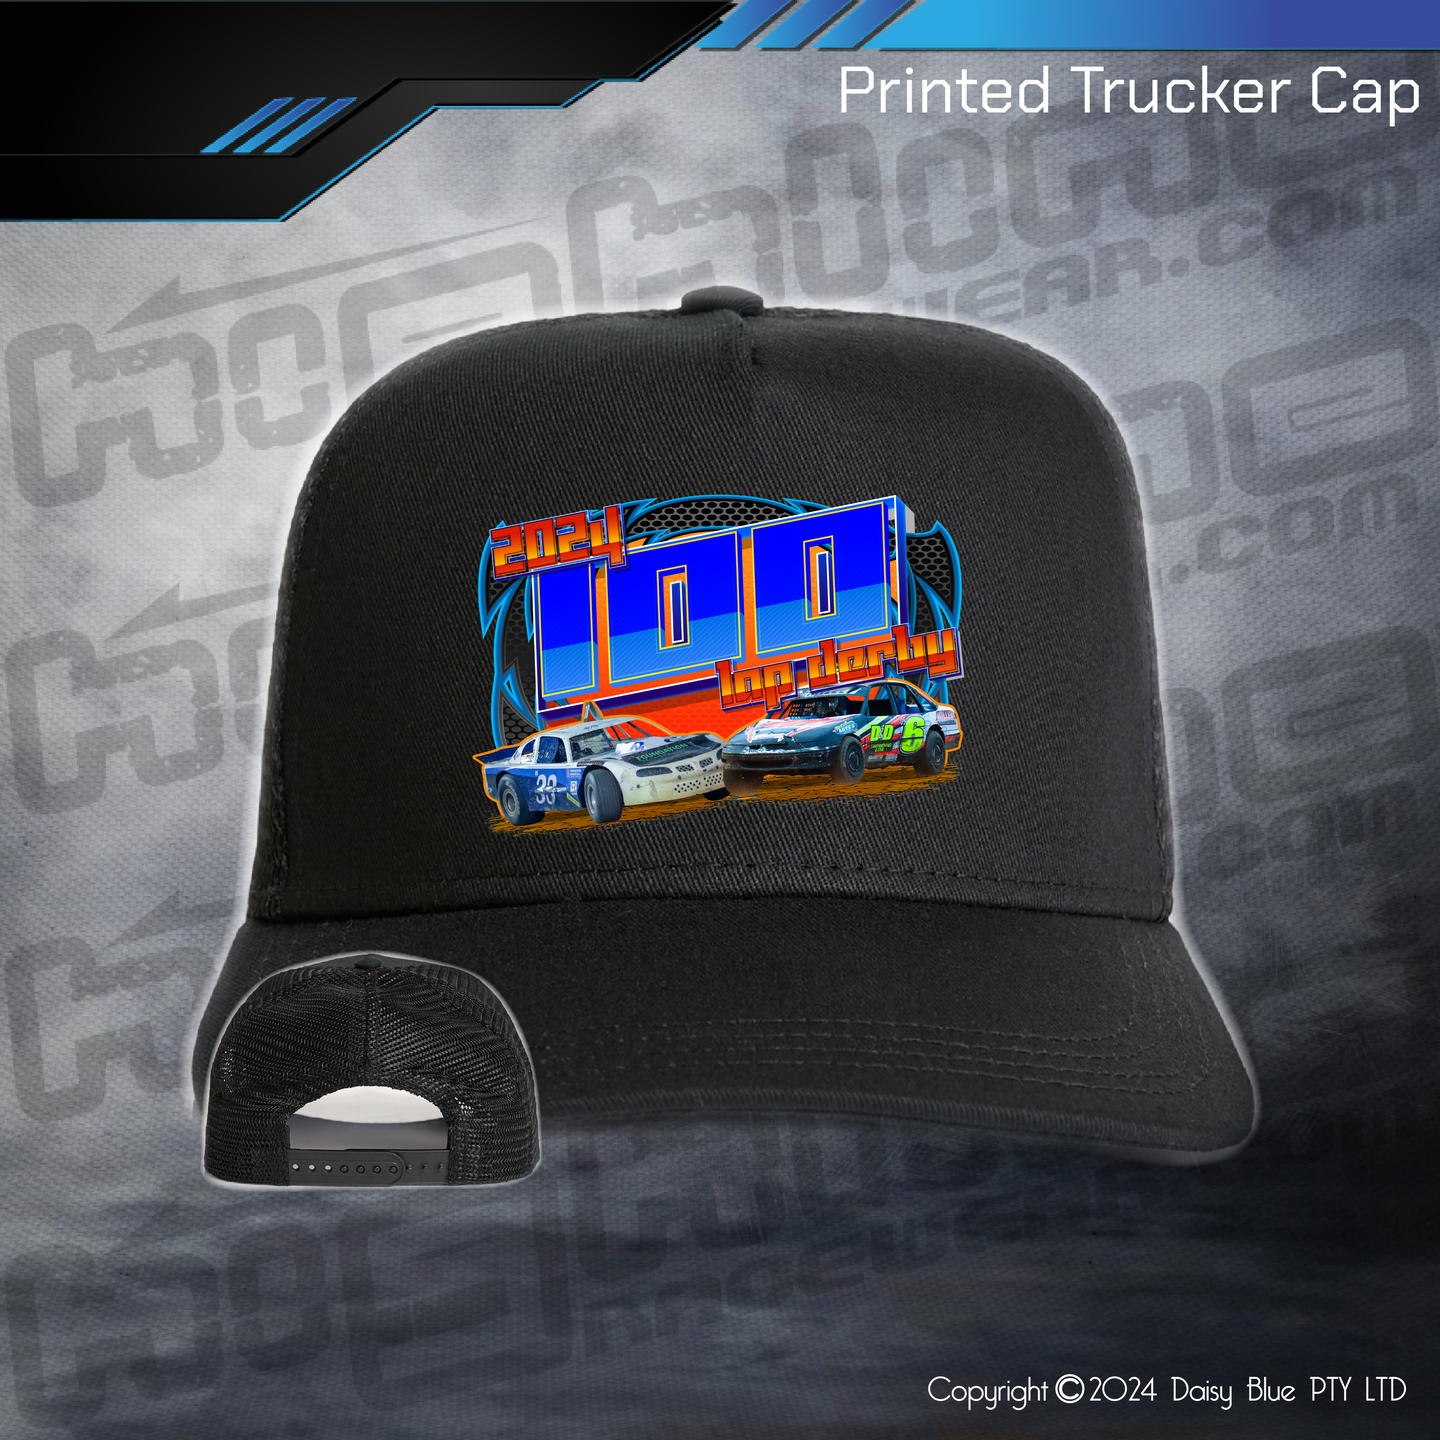 Printed Trucker Cap - 100 Lap Derby 2024